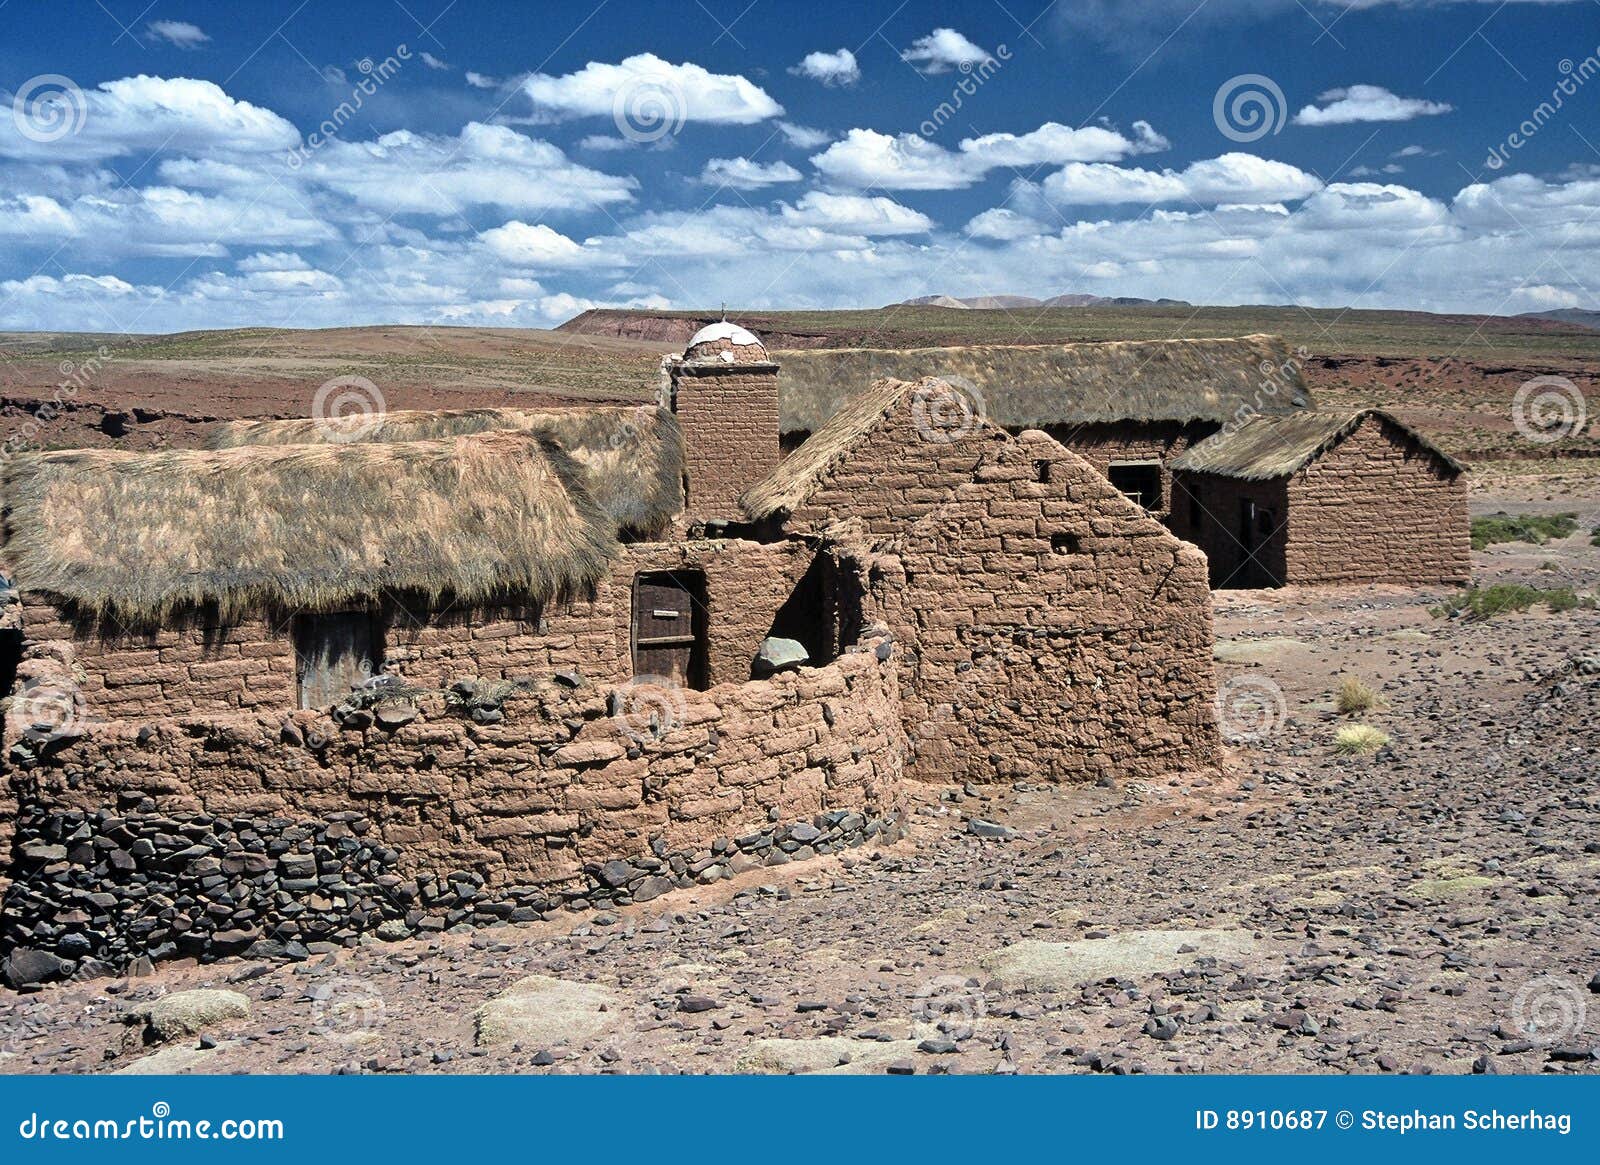 houses on altiplano in bolivia,bolivia